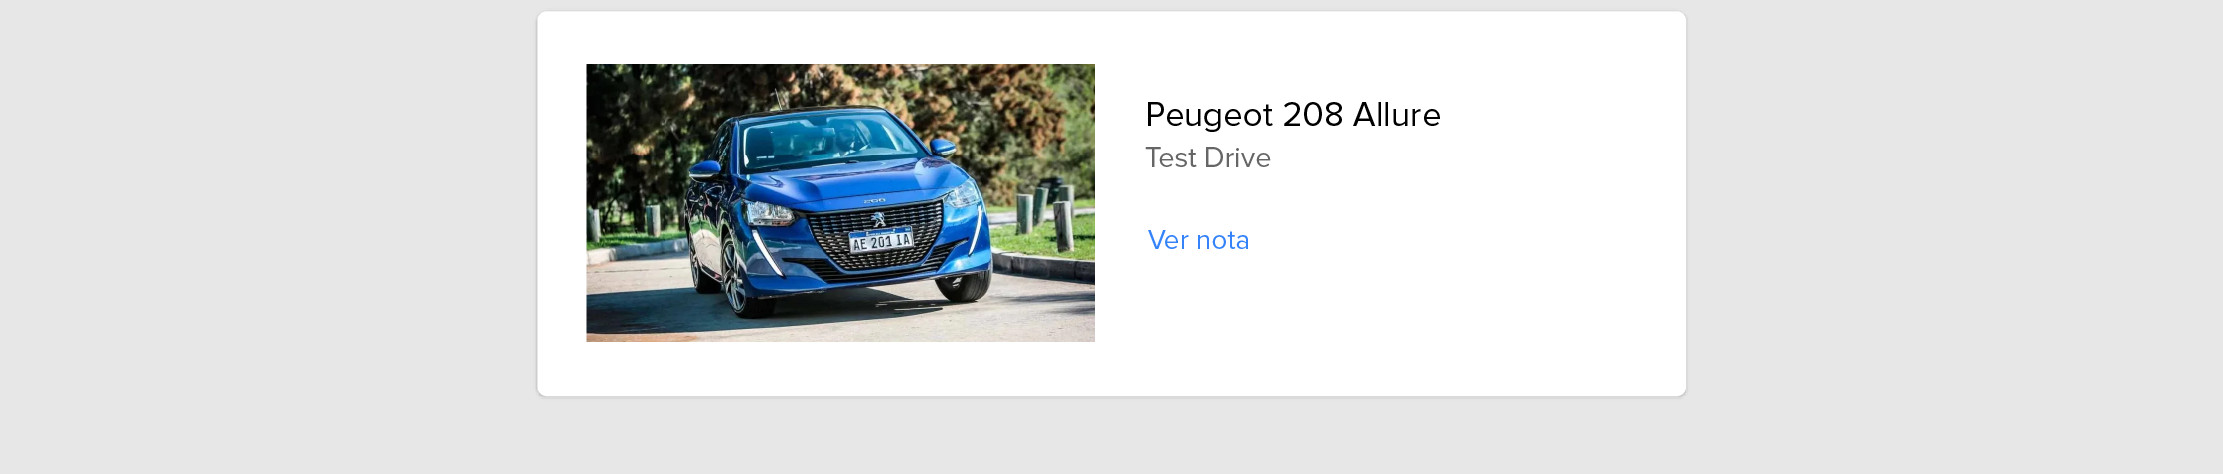 Peugeot 208 test drive